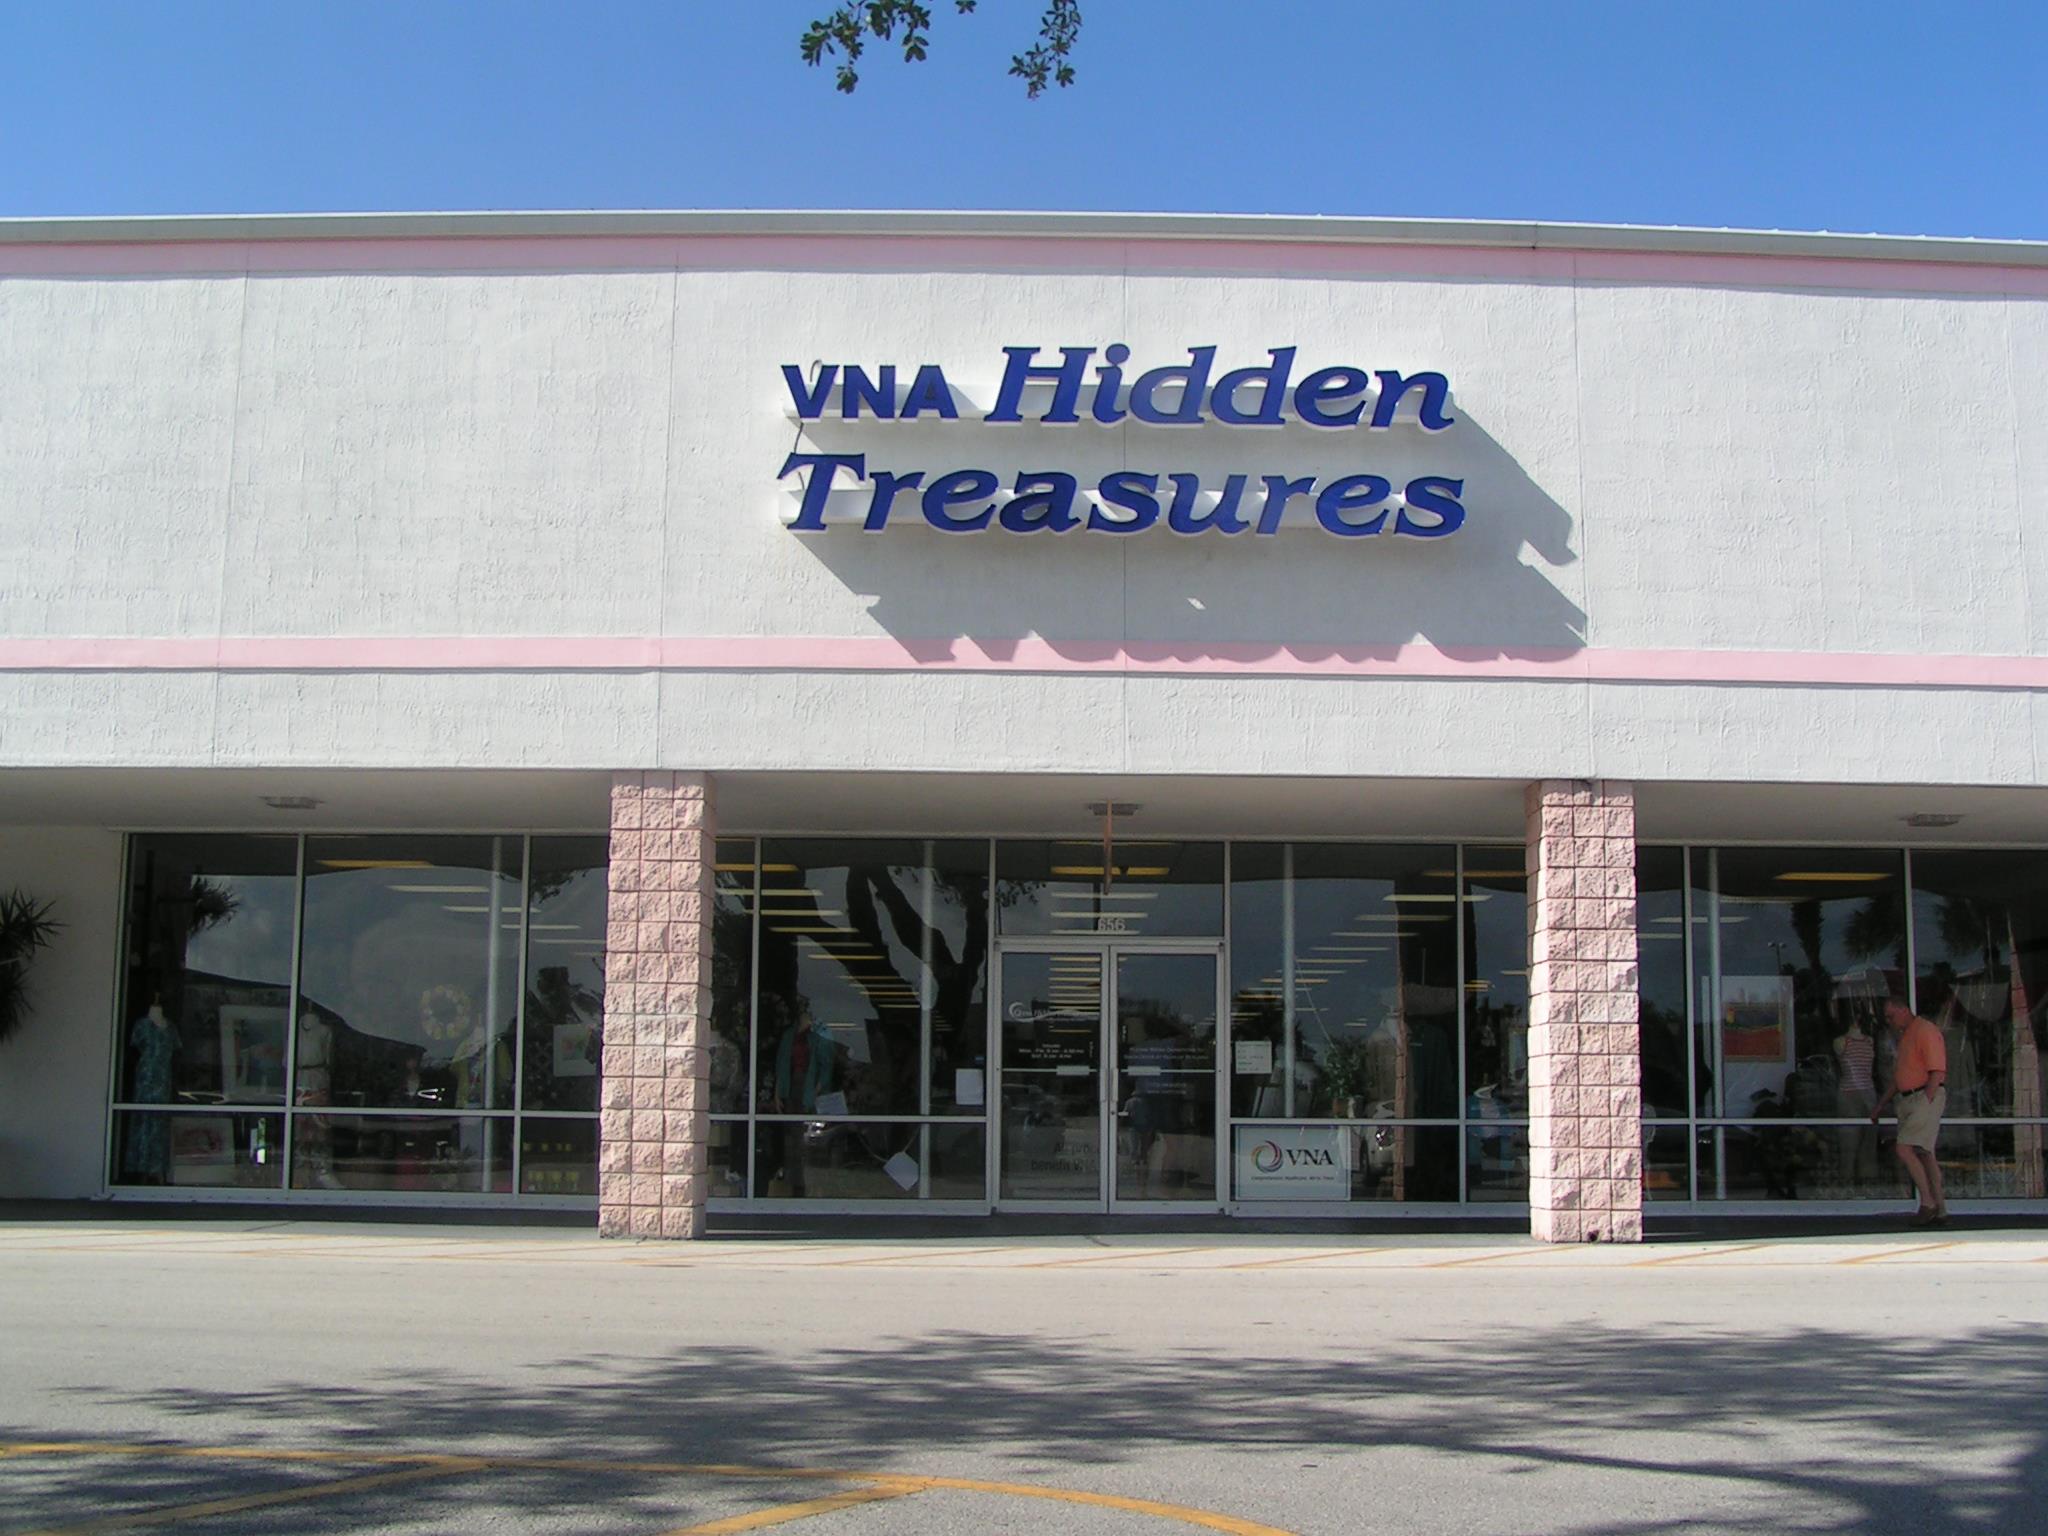 VNA Hidden Treasures